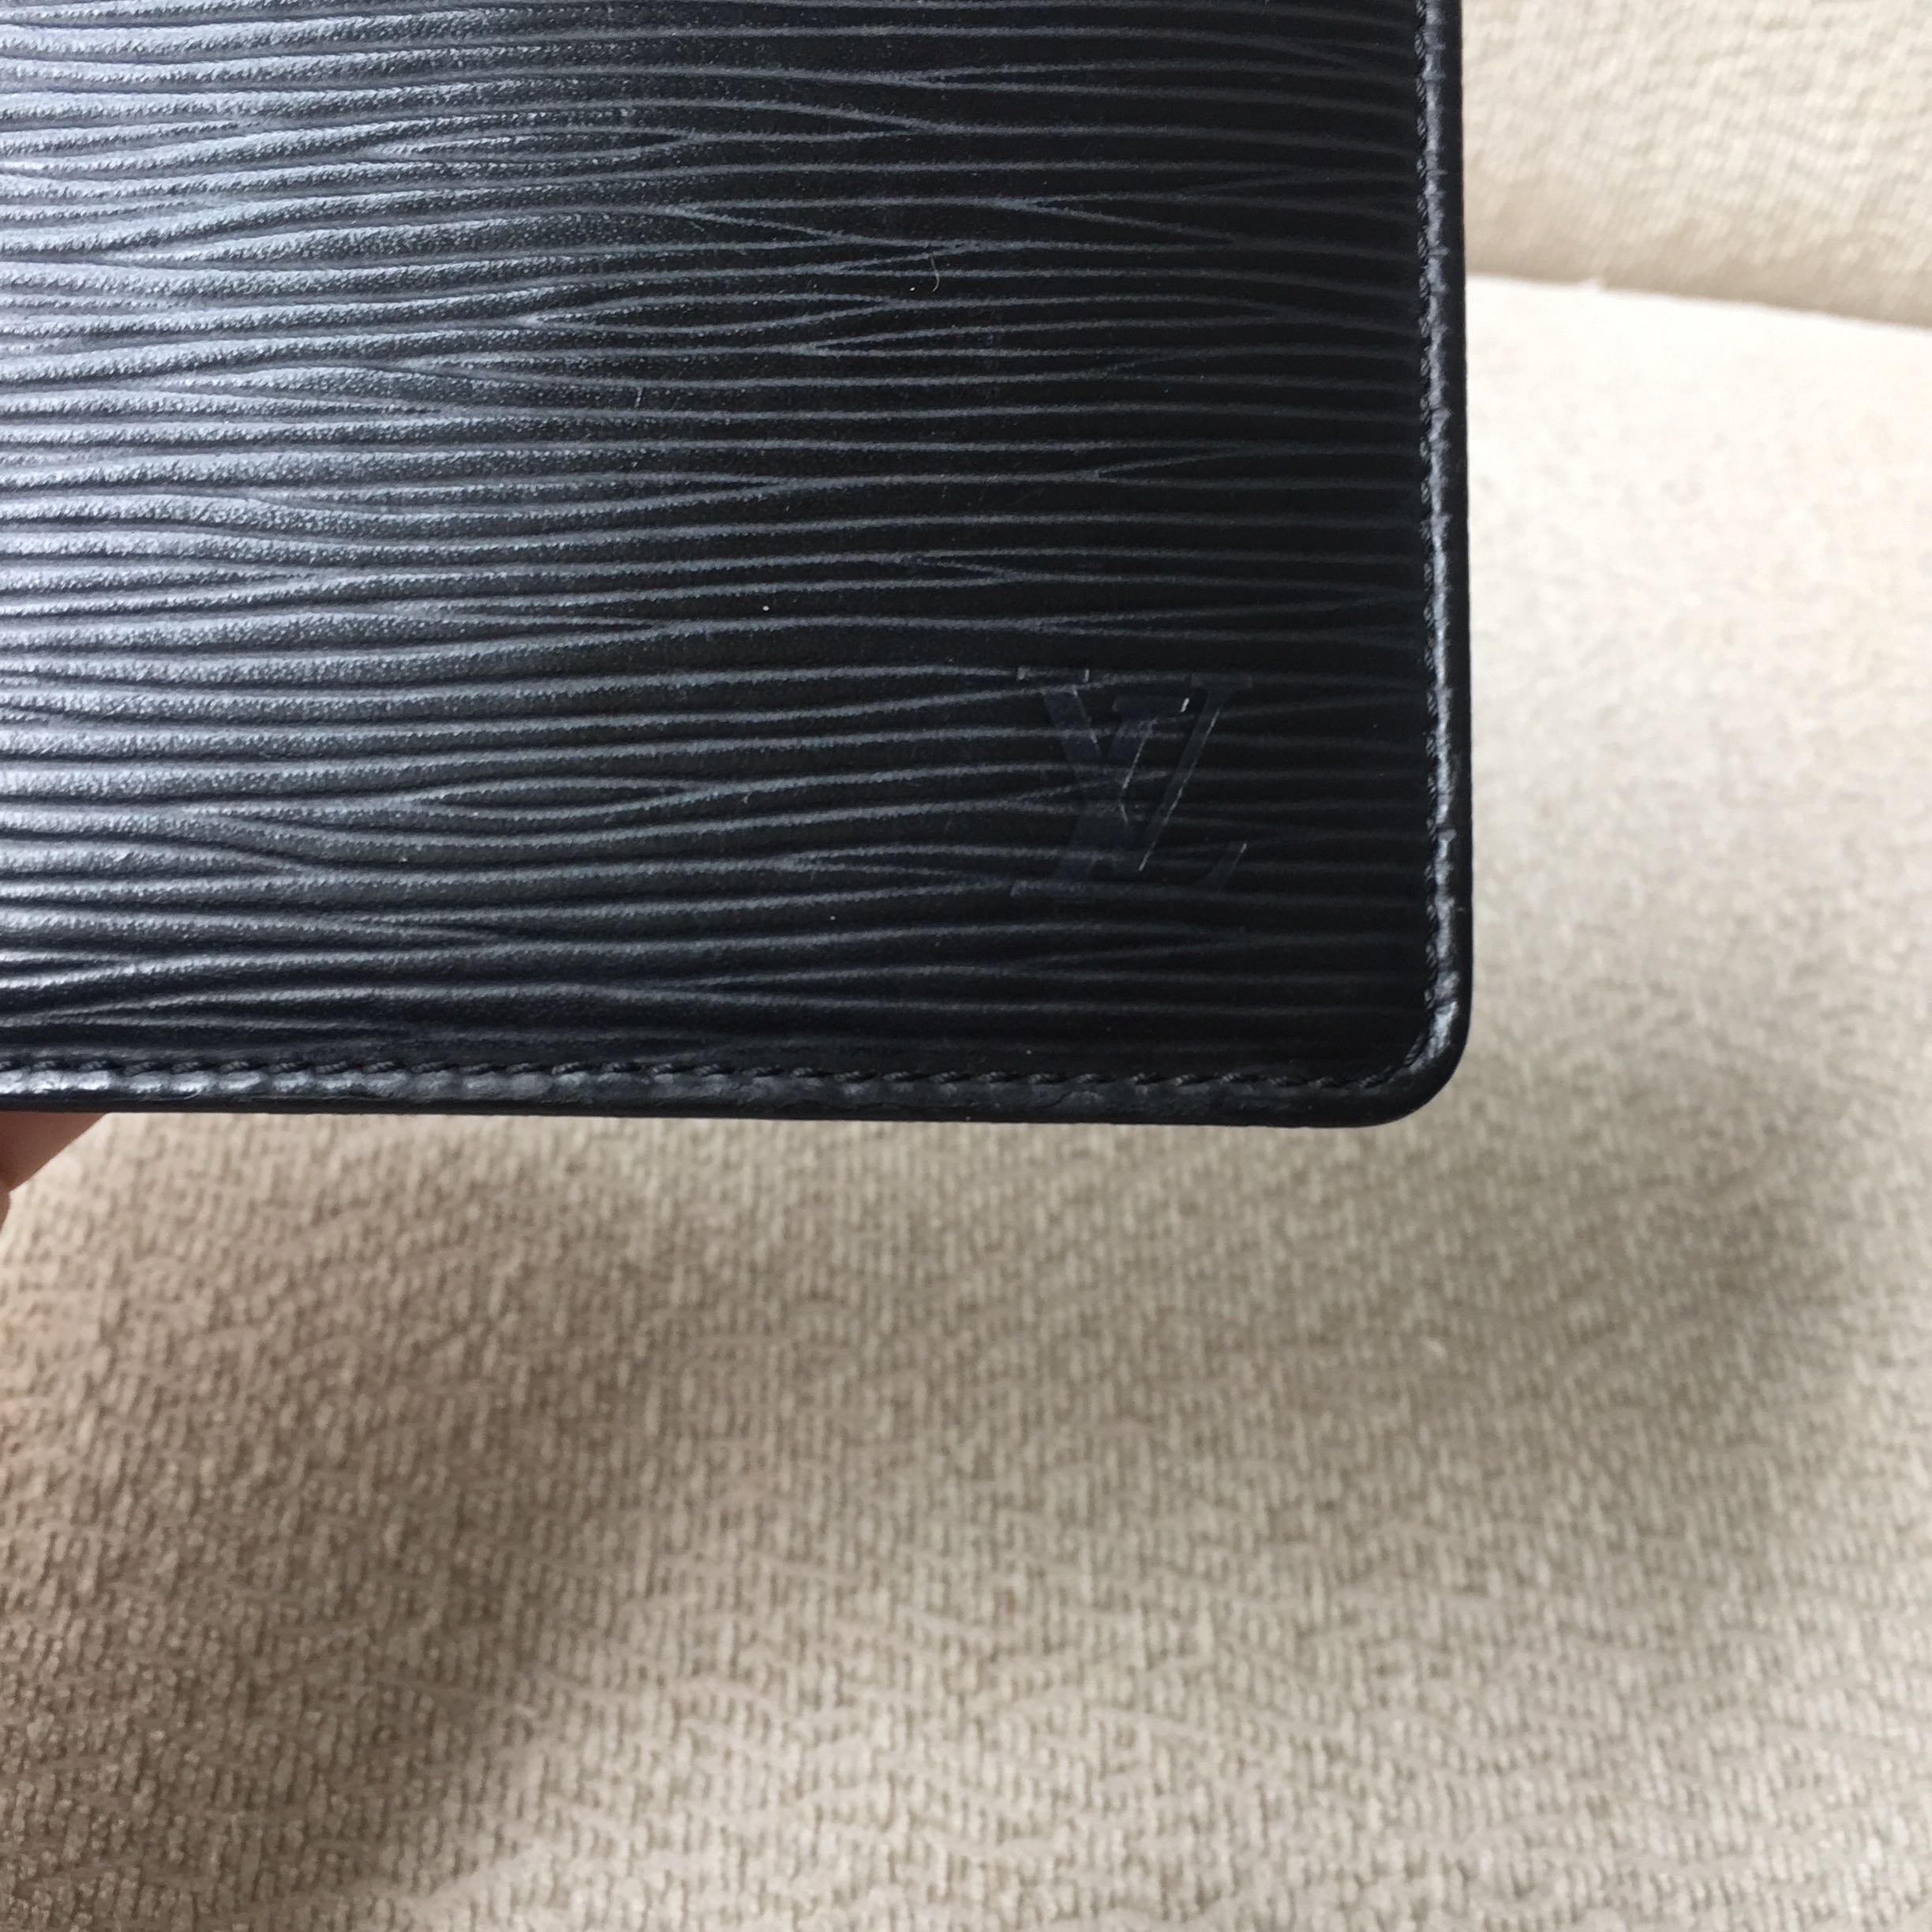 AUTHENTIC LV LOUIS VUITTON Epi Leather Card Holder / Case, Luxury